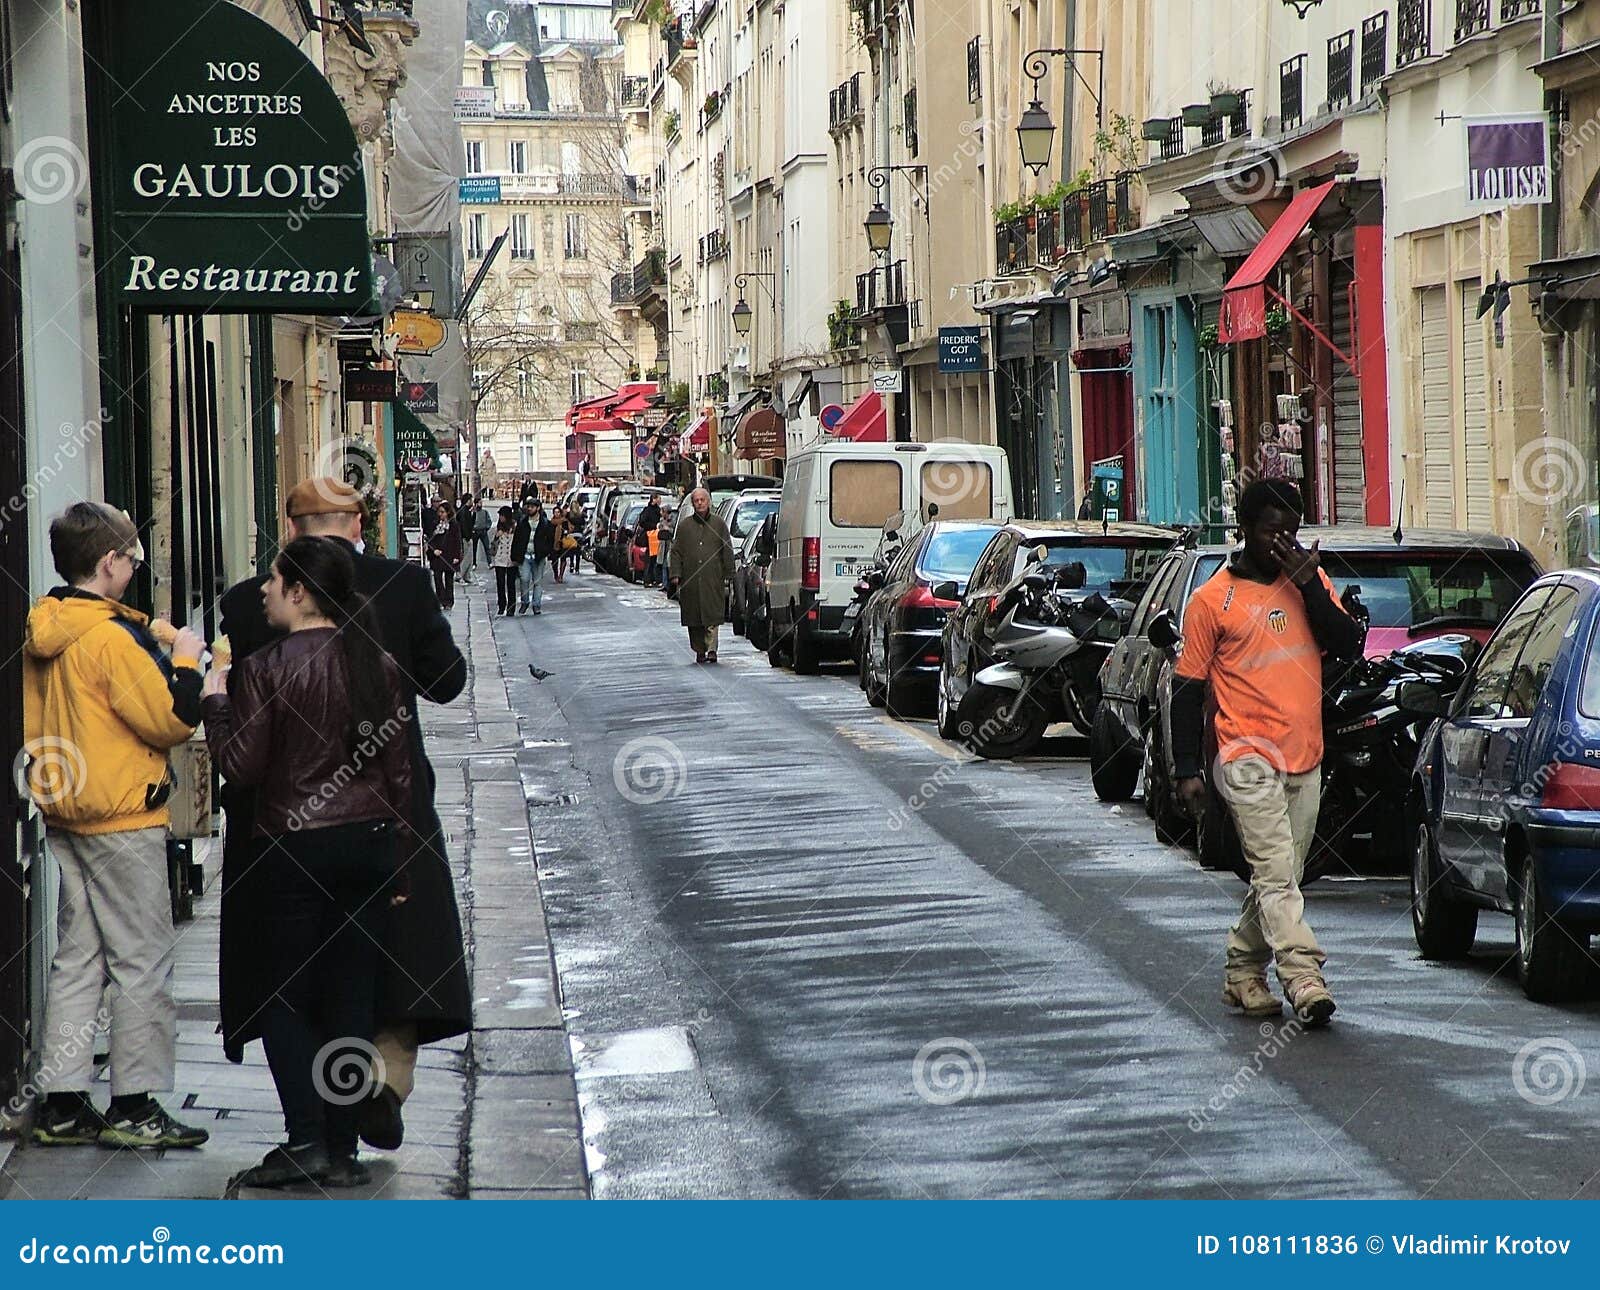 On The Main Street Of Saint-Louis In Paris Editorial Photo - Image of rest, paris: 108111836